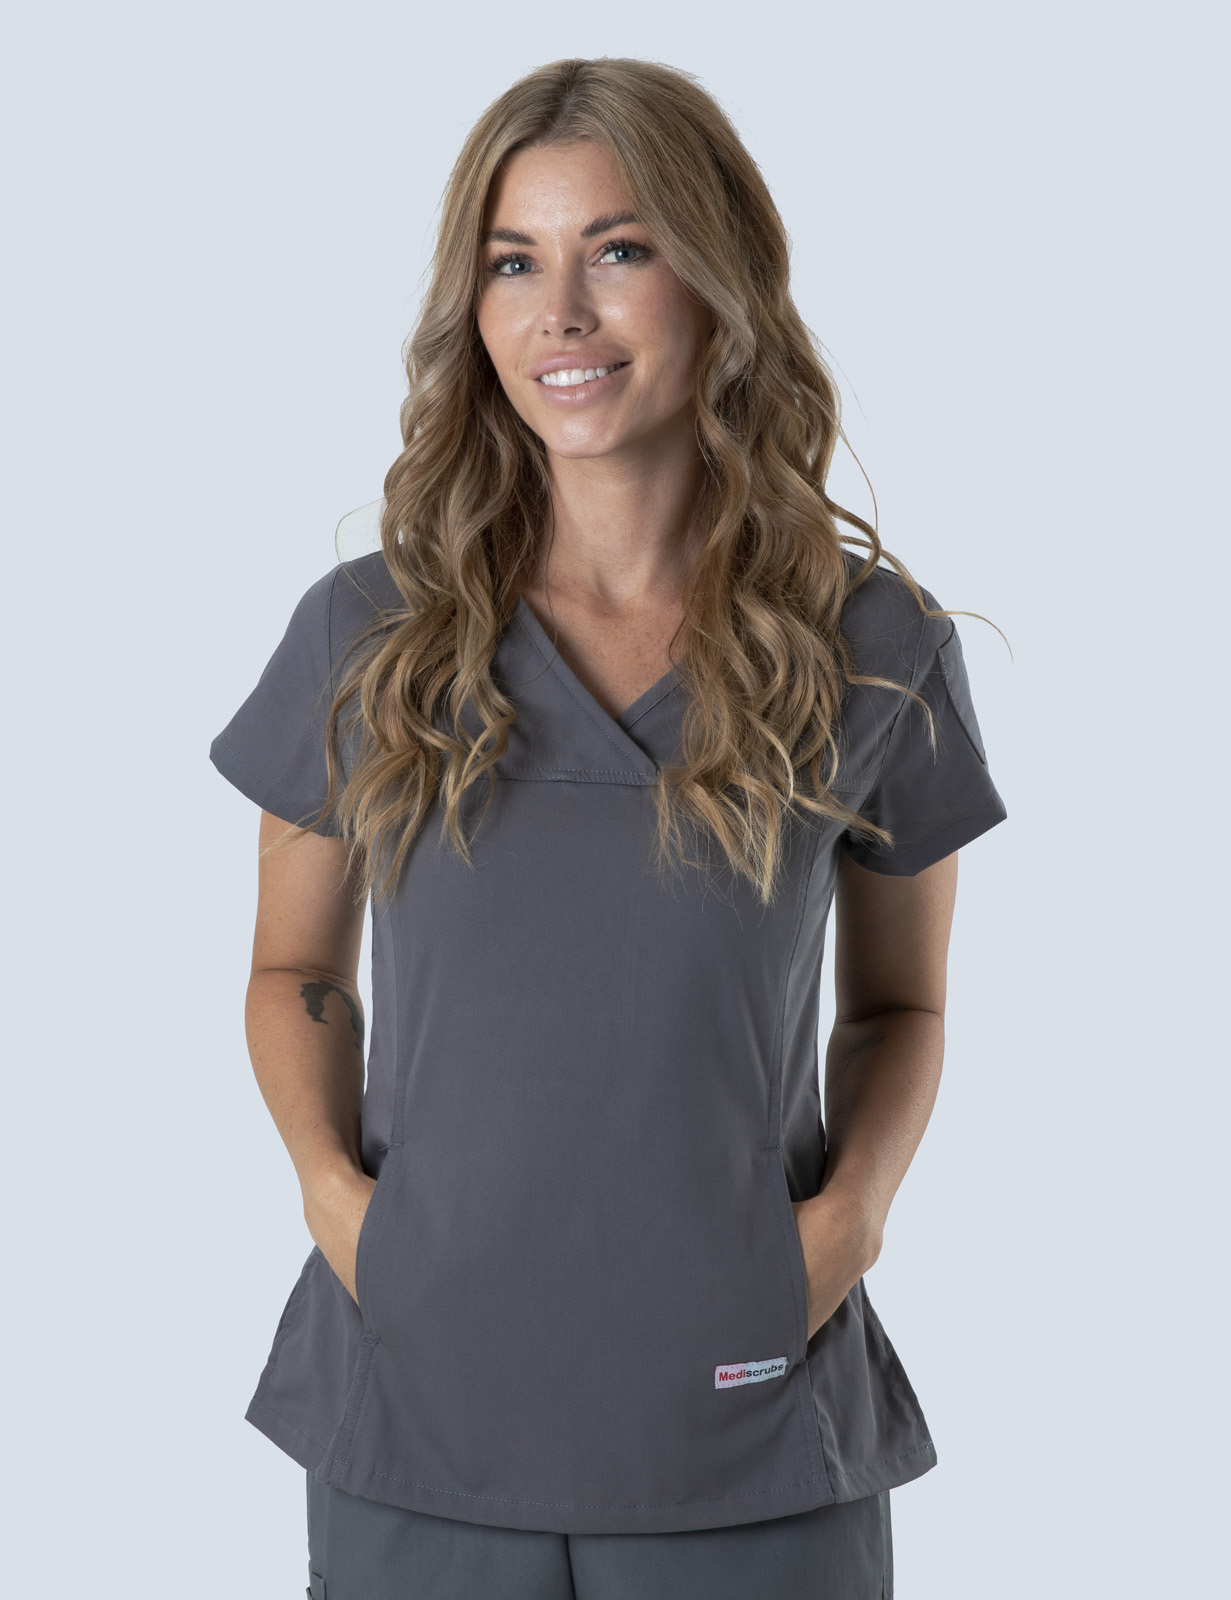 Goulburn Valley Health - MI (Women's Fit Solid Scrub Top in Steel Grey incl Logos)